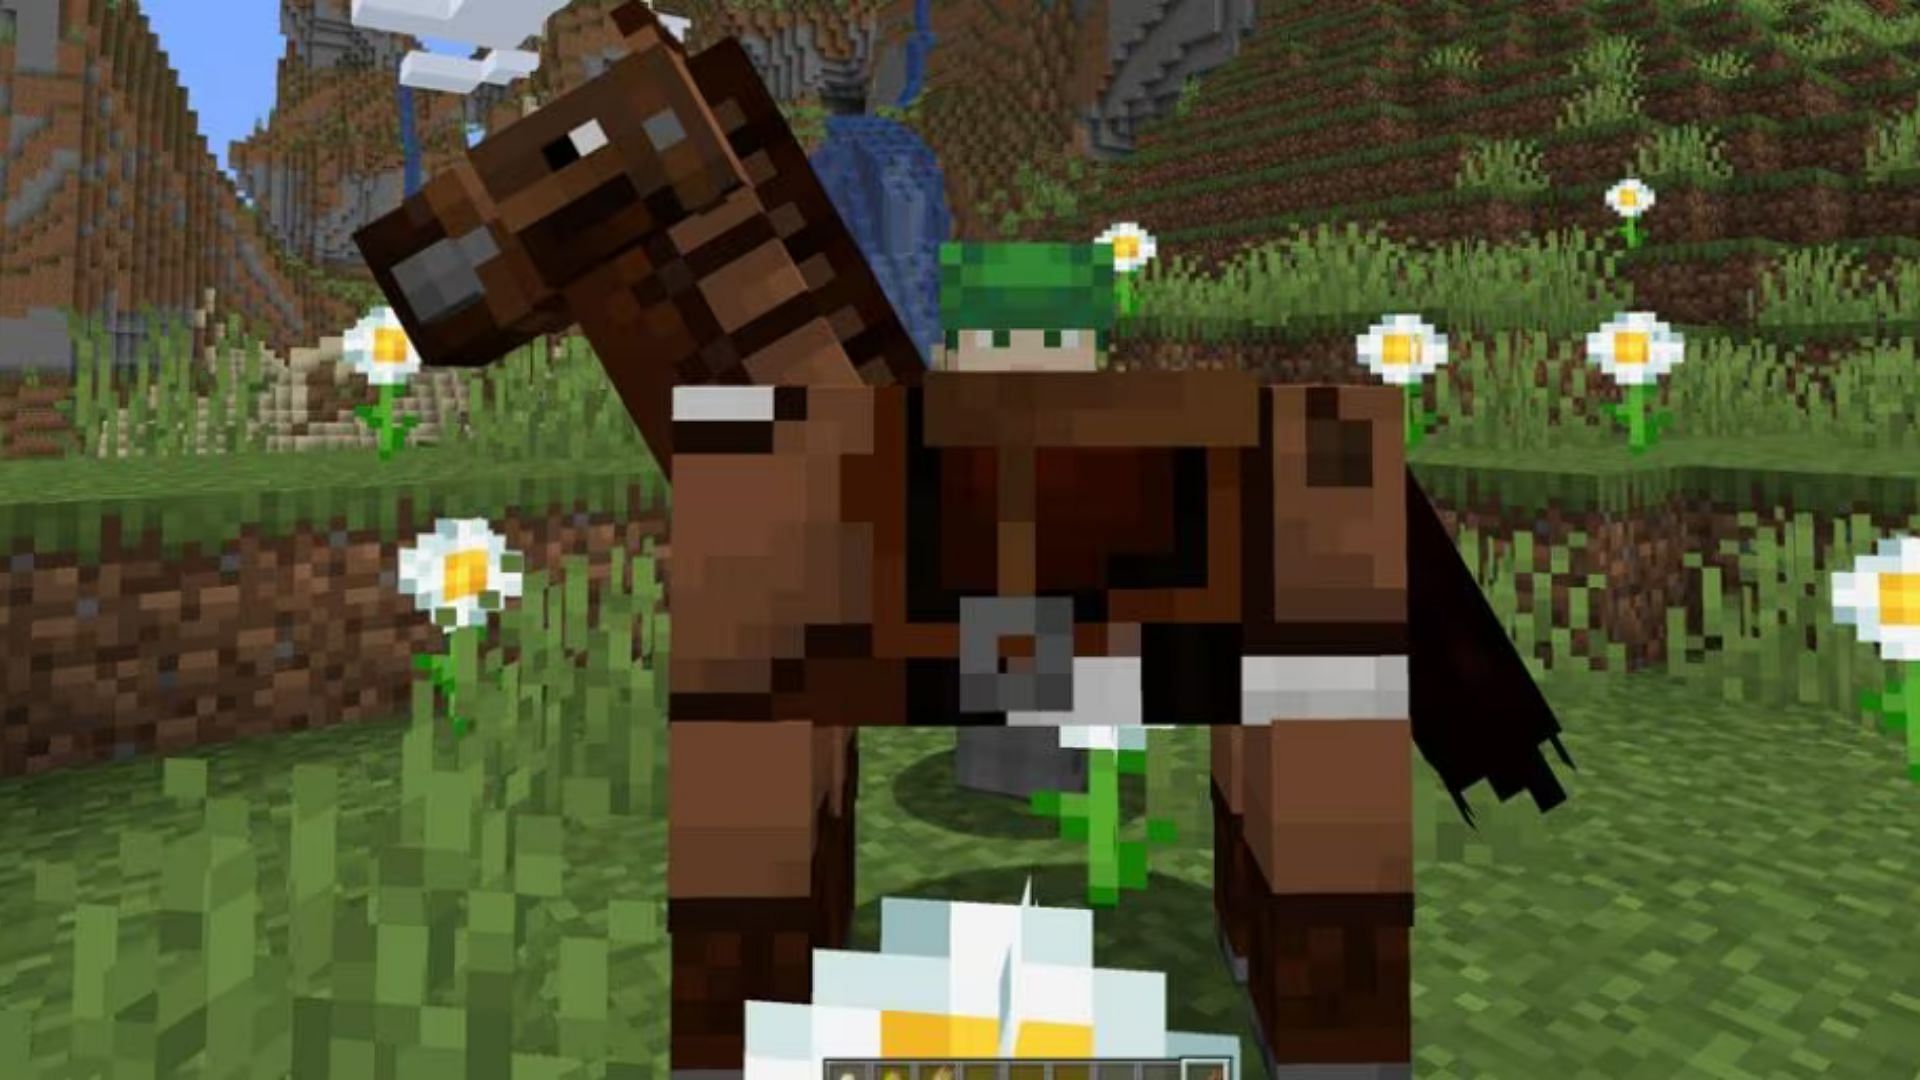 Horse armor in Minecraft (Image via Mojang Studios)